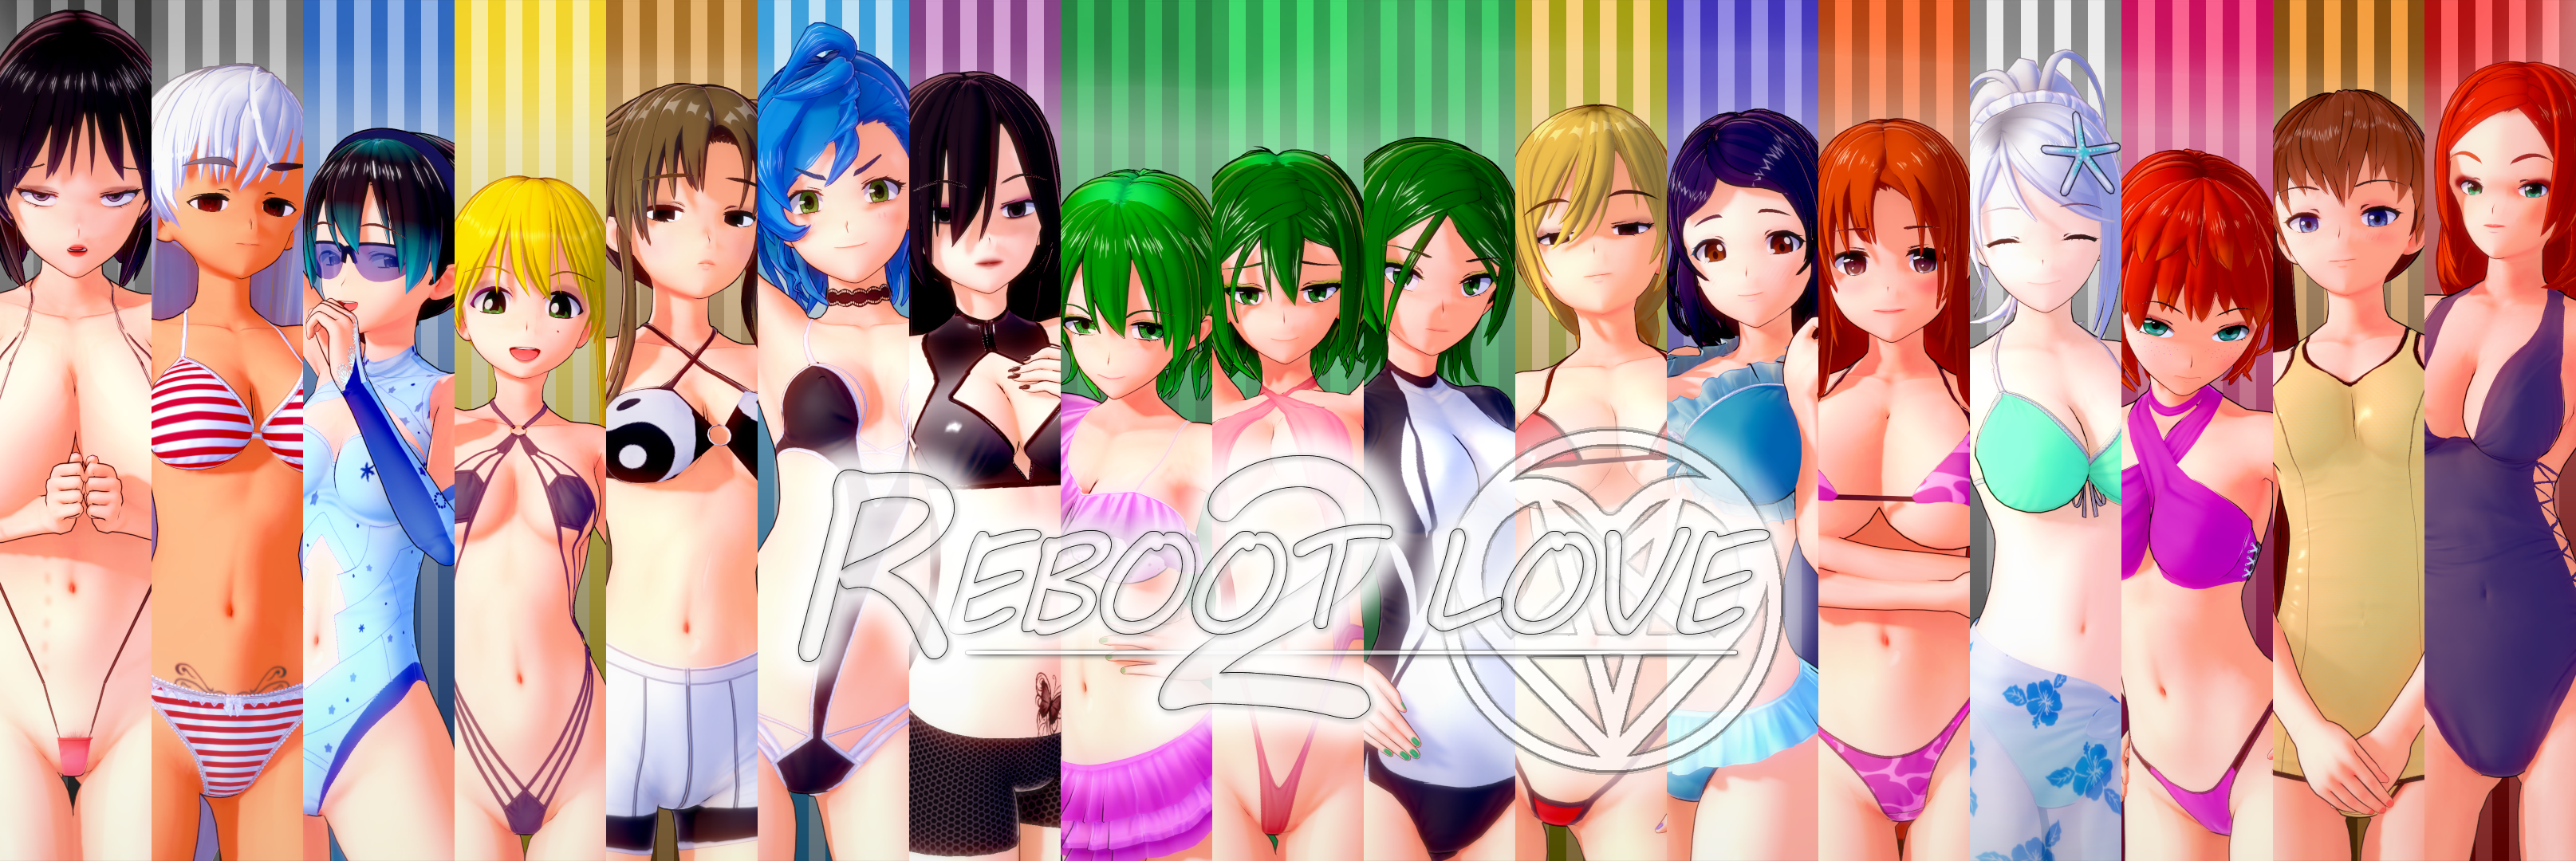 Reboot Love Part 2 poster